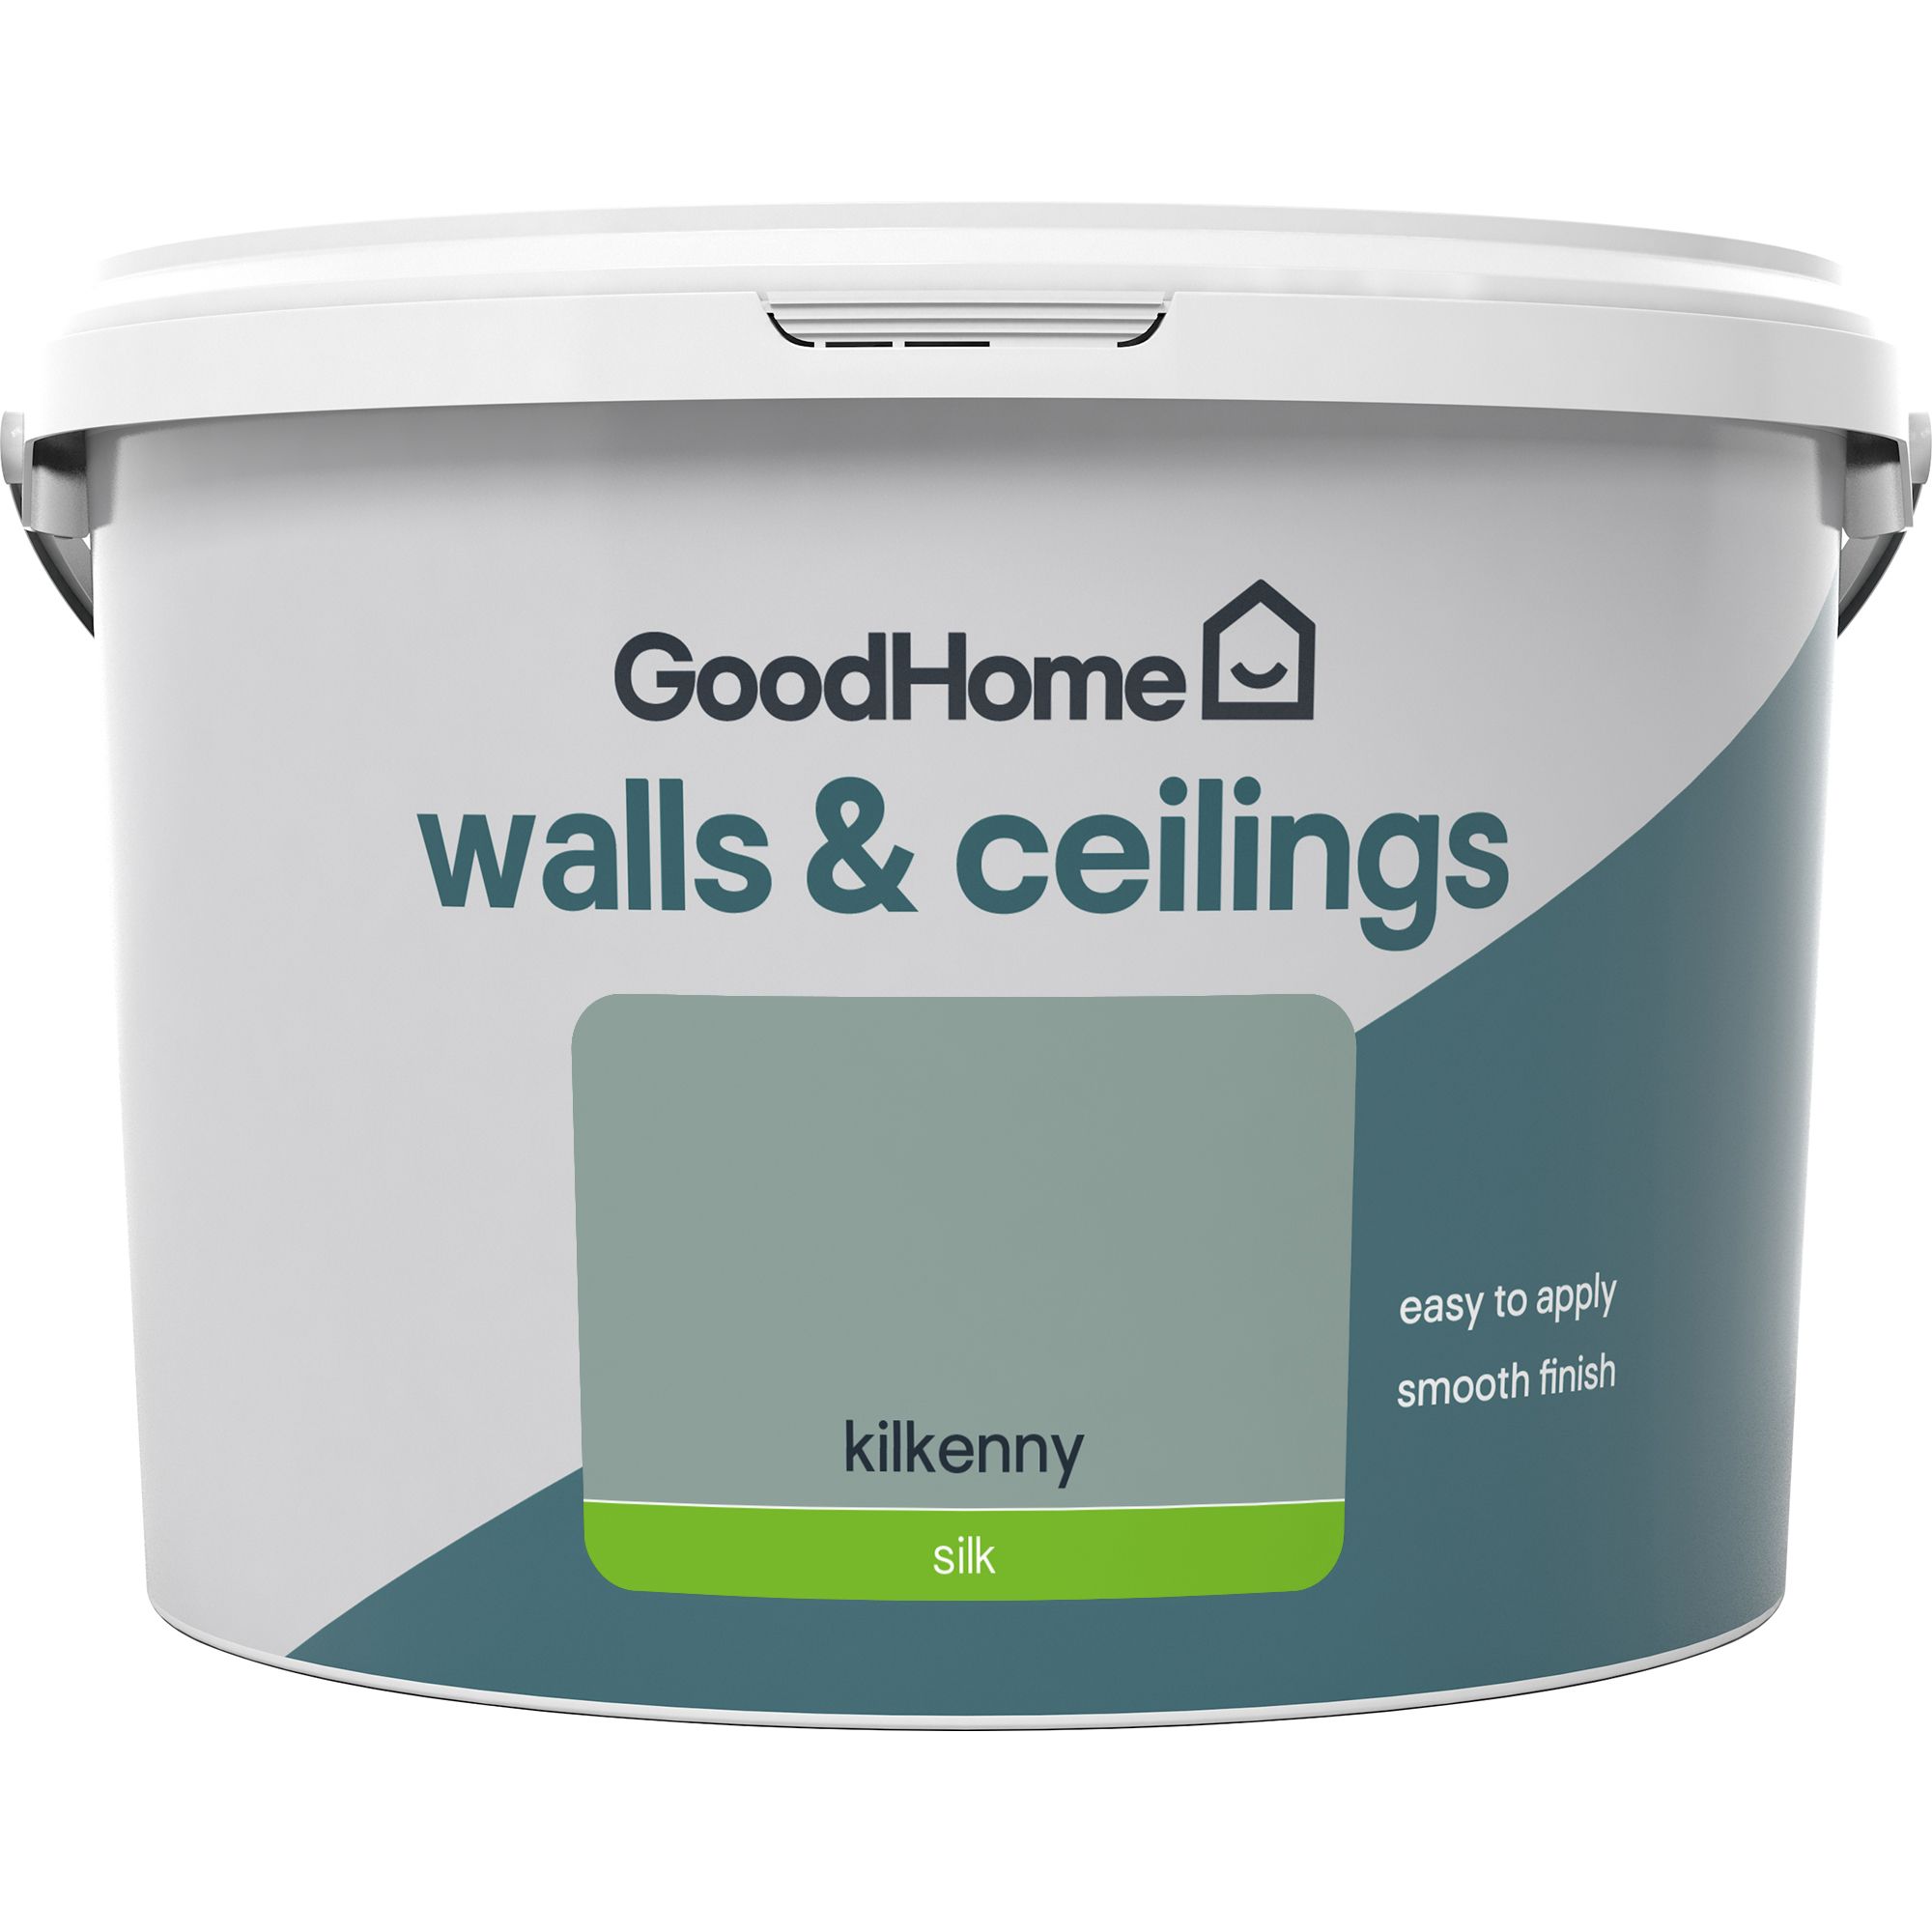 GoodHome Walls & ceilings Kilkenny Silk Emulsion paint, 2.5L